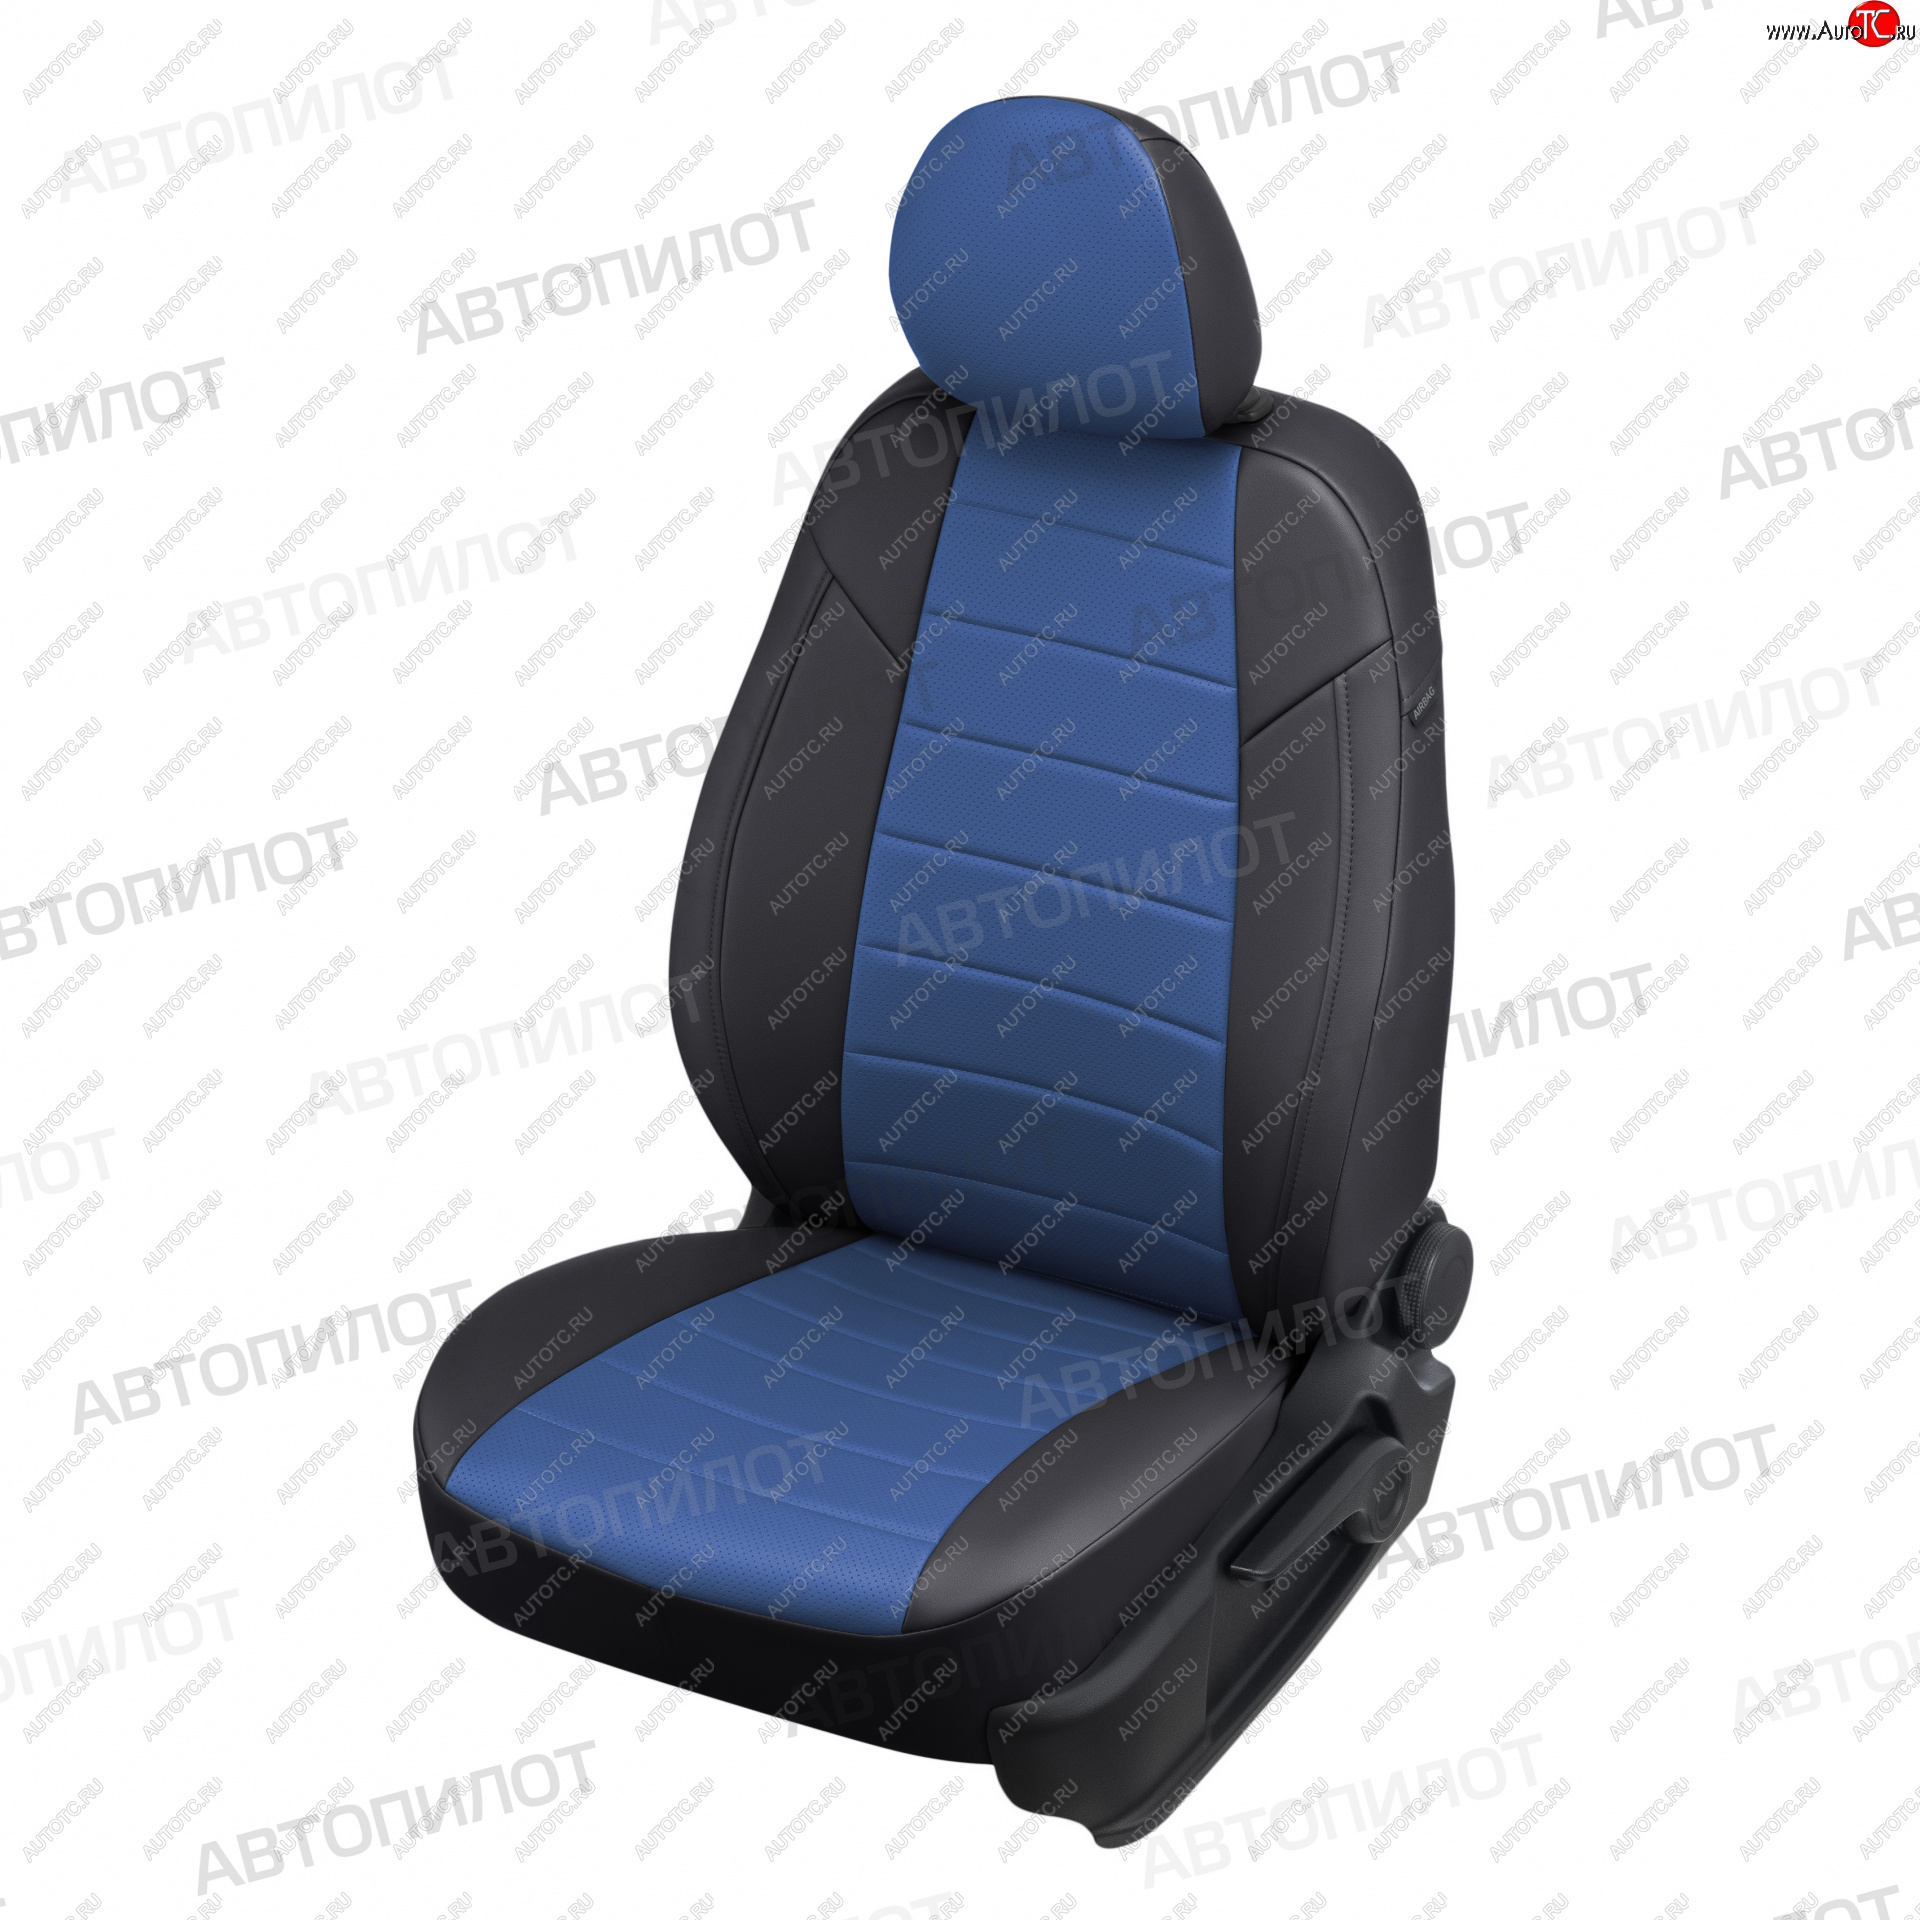 13 449 р. Чехлы сидений (экокожа) Автопилот  KIA Sportage  2 JE,KM (2008-2010) (черный/синий)